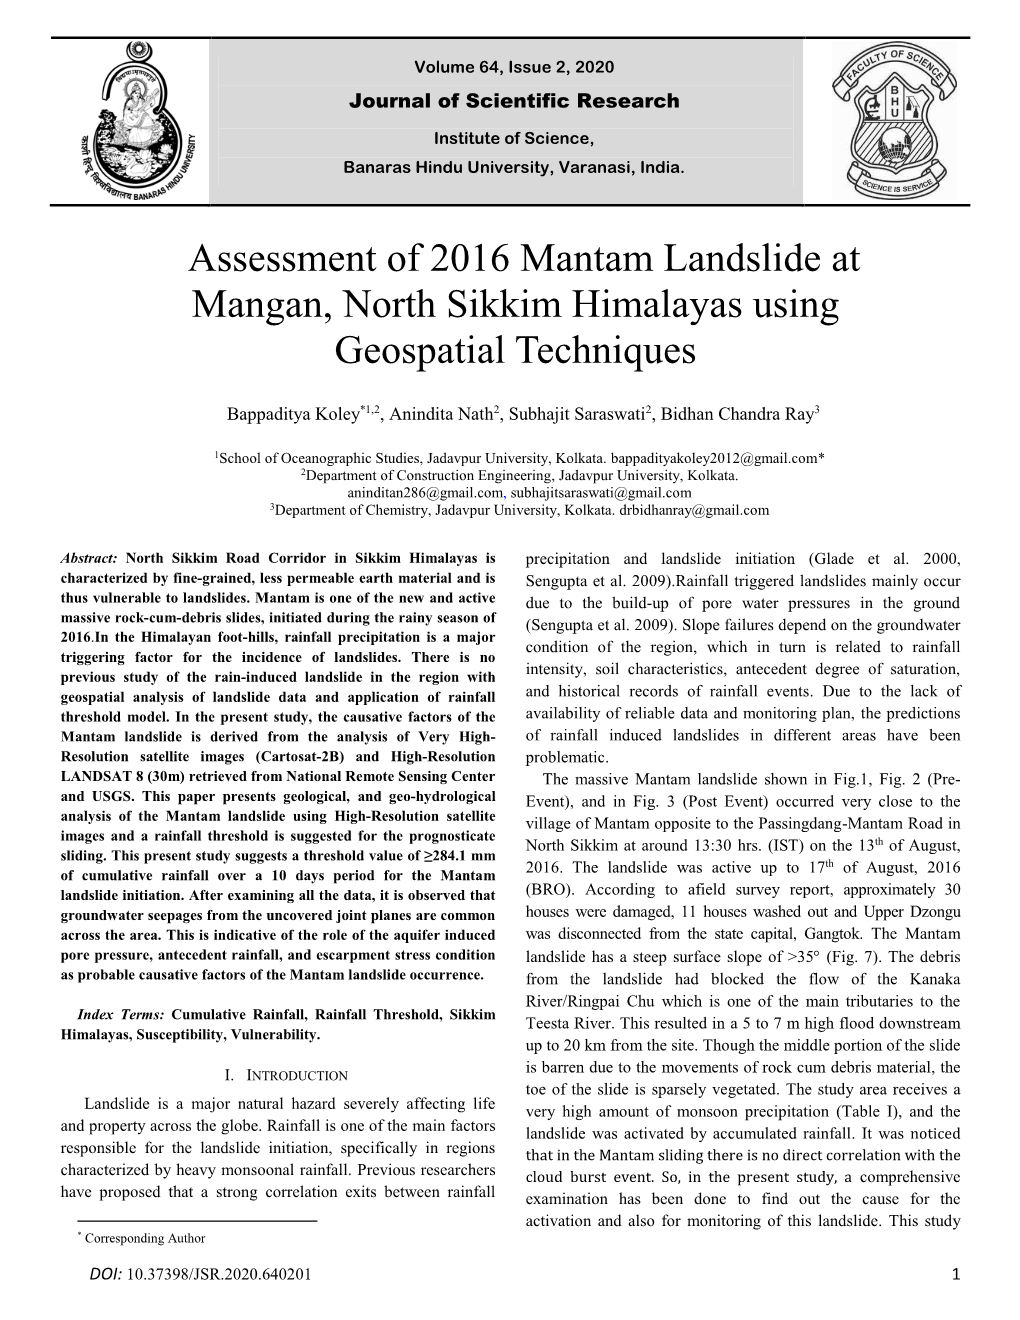 Assessment of 2016 Mantam Landslide at Mangan, North Sikkim Himalayas Using Geospatial Techniques